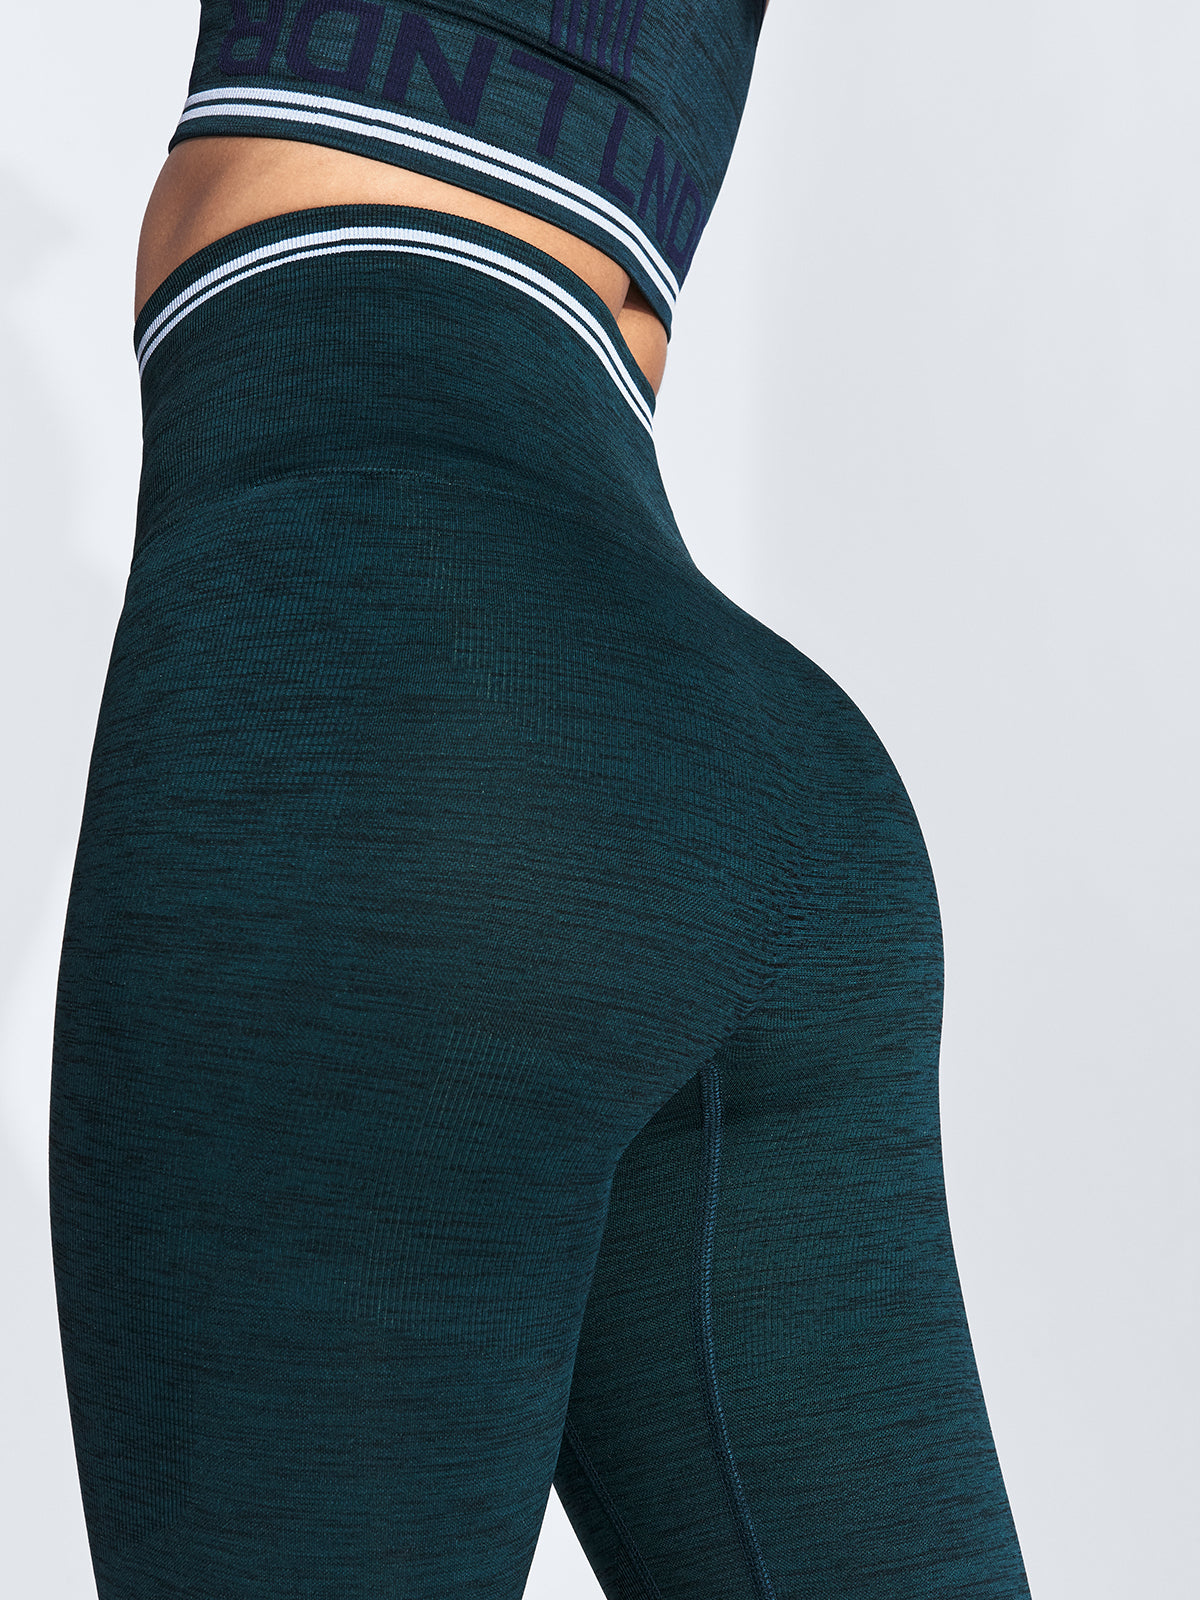 INNERSY Women's Leggings High Waisted Tummy Control Yoga Pants Workout  Leggings (M, Teal Green) - Walmart.com